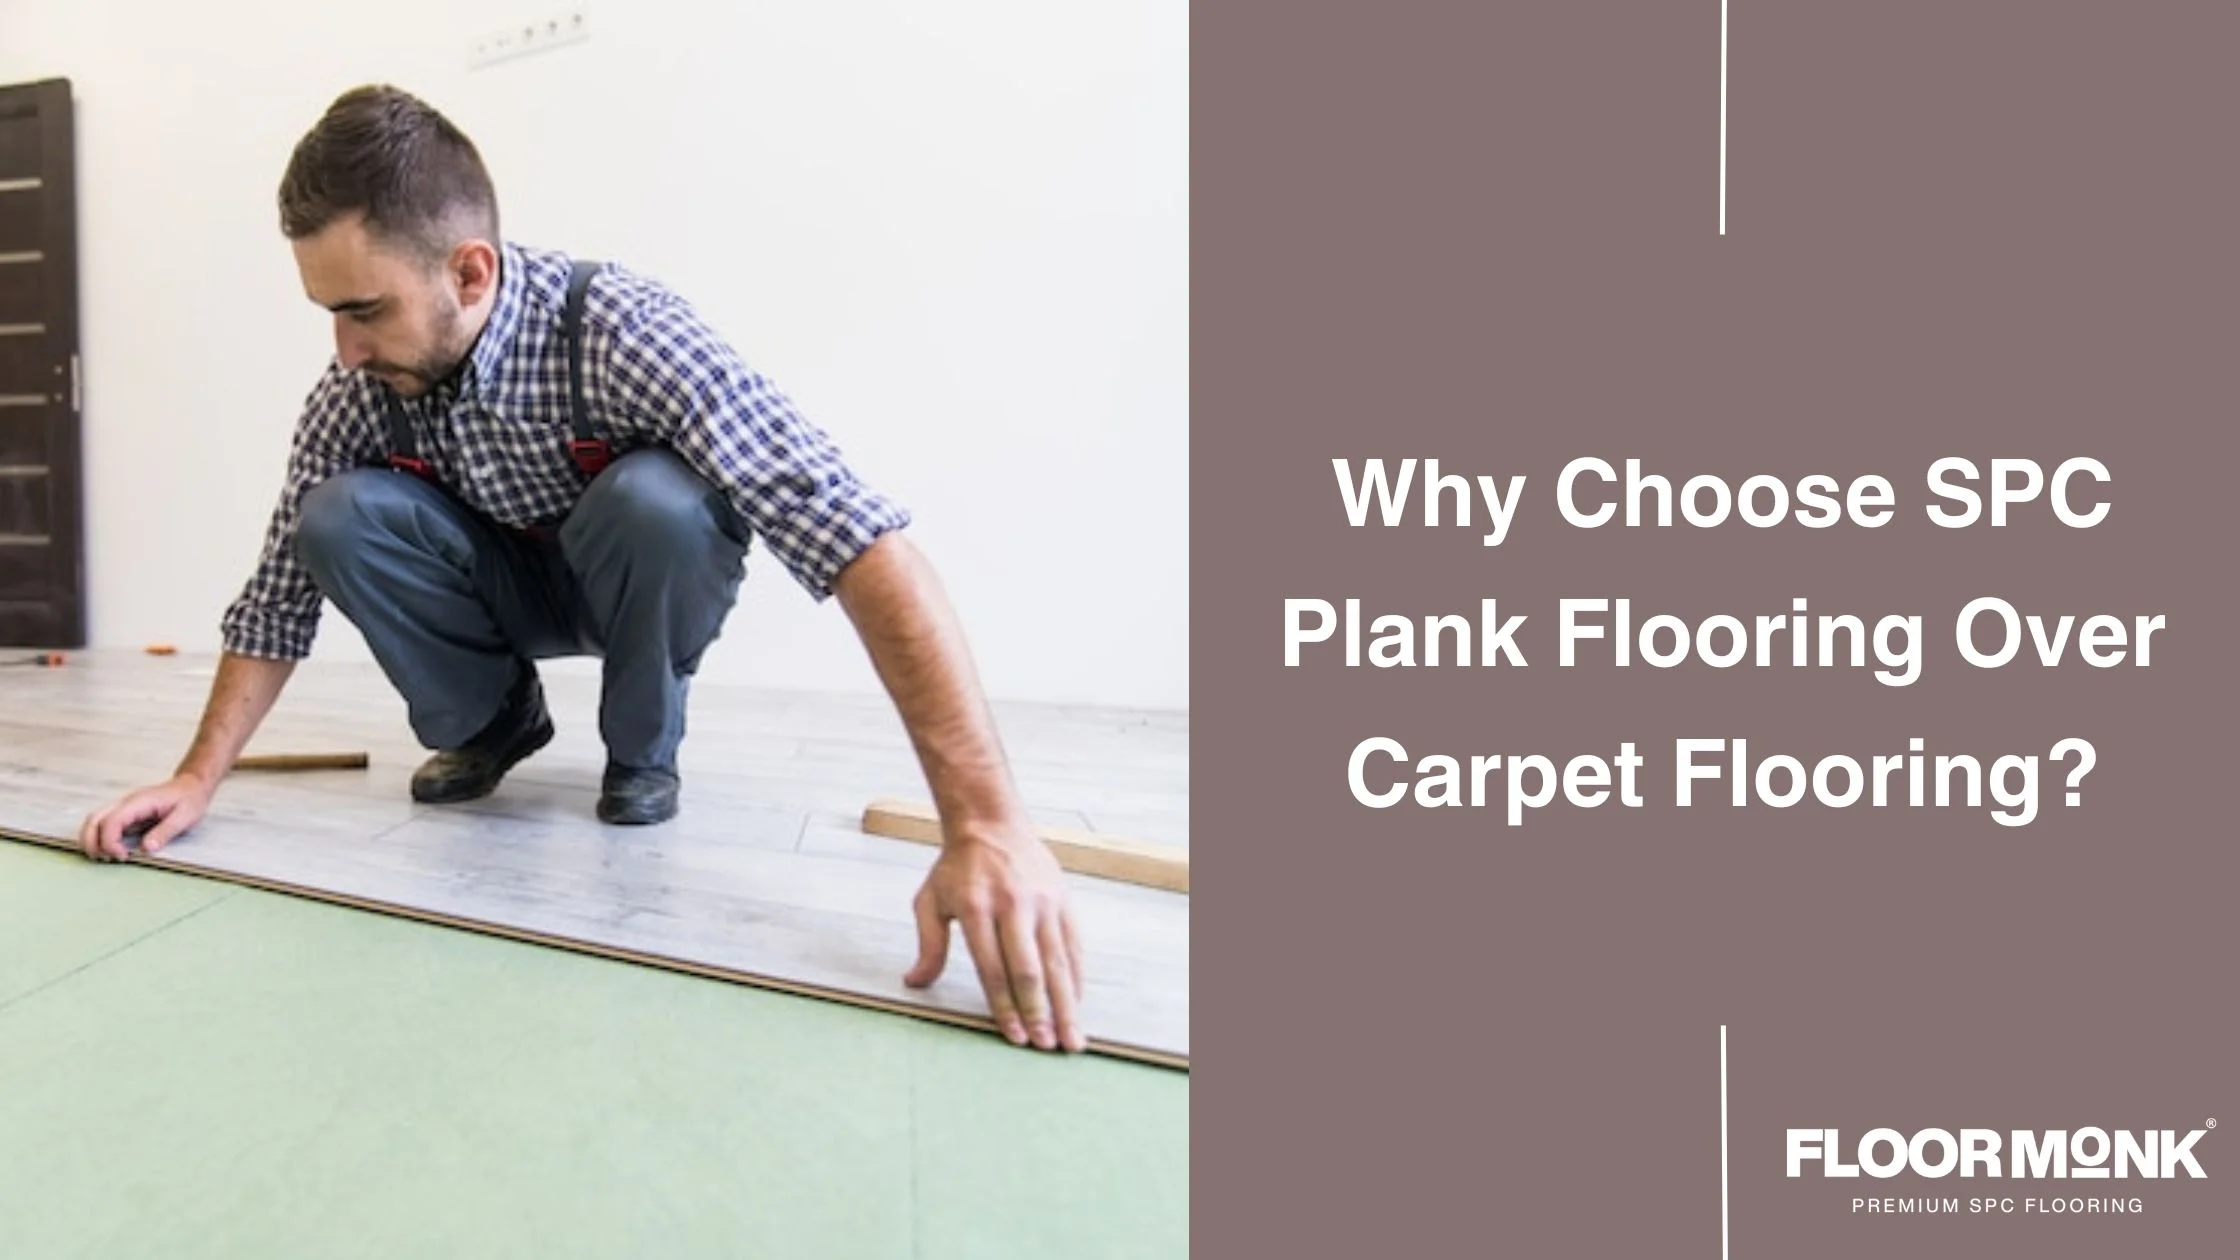 Why Choose SPC Plank Flooring Over Carpet Flooring?